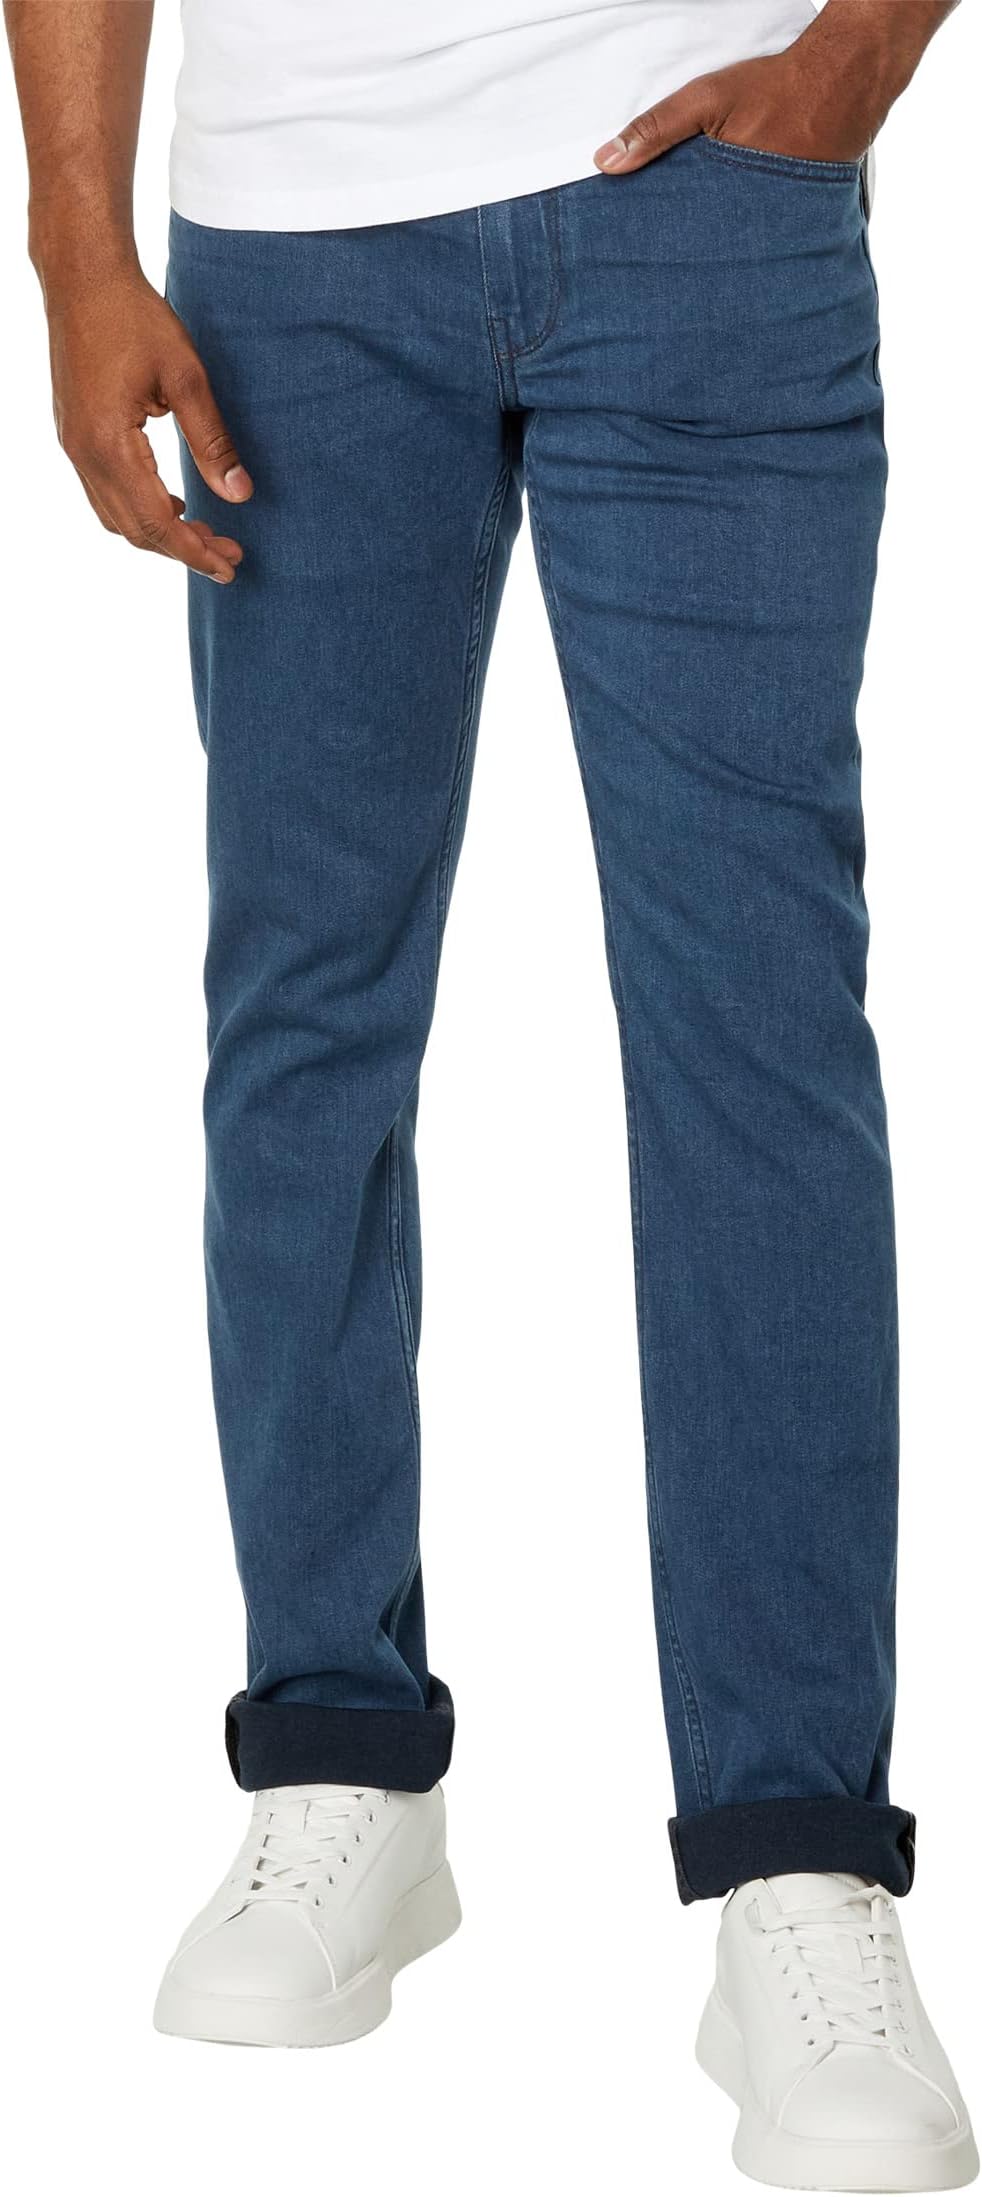 Джинсы Federal Transcend Slim Straight Fit Jeans Paige, цвет Sheridan джинсы federal transcend slim straight fit jeans paige цвет patterson